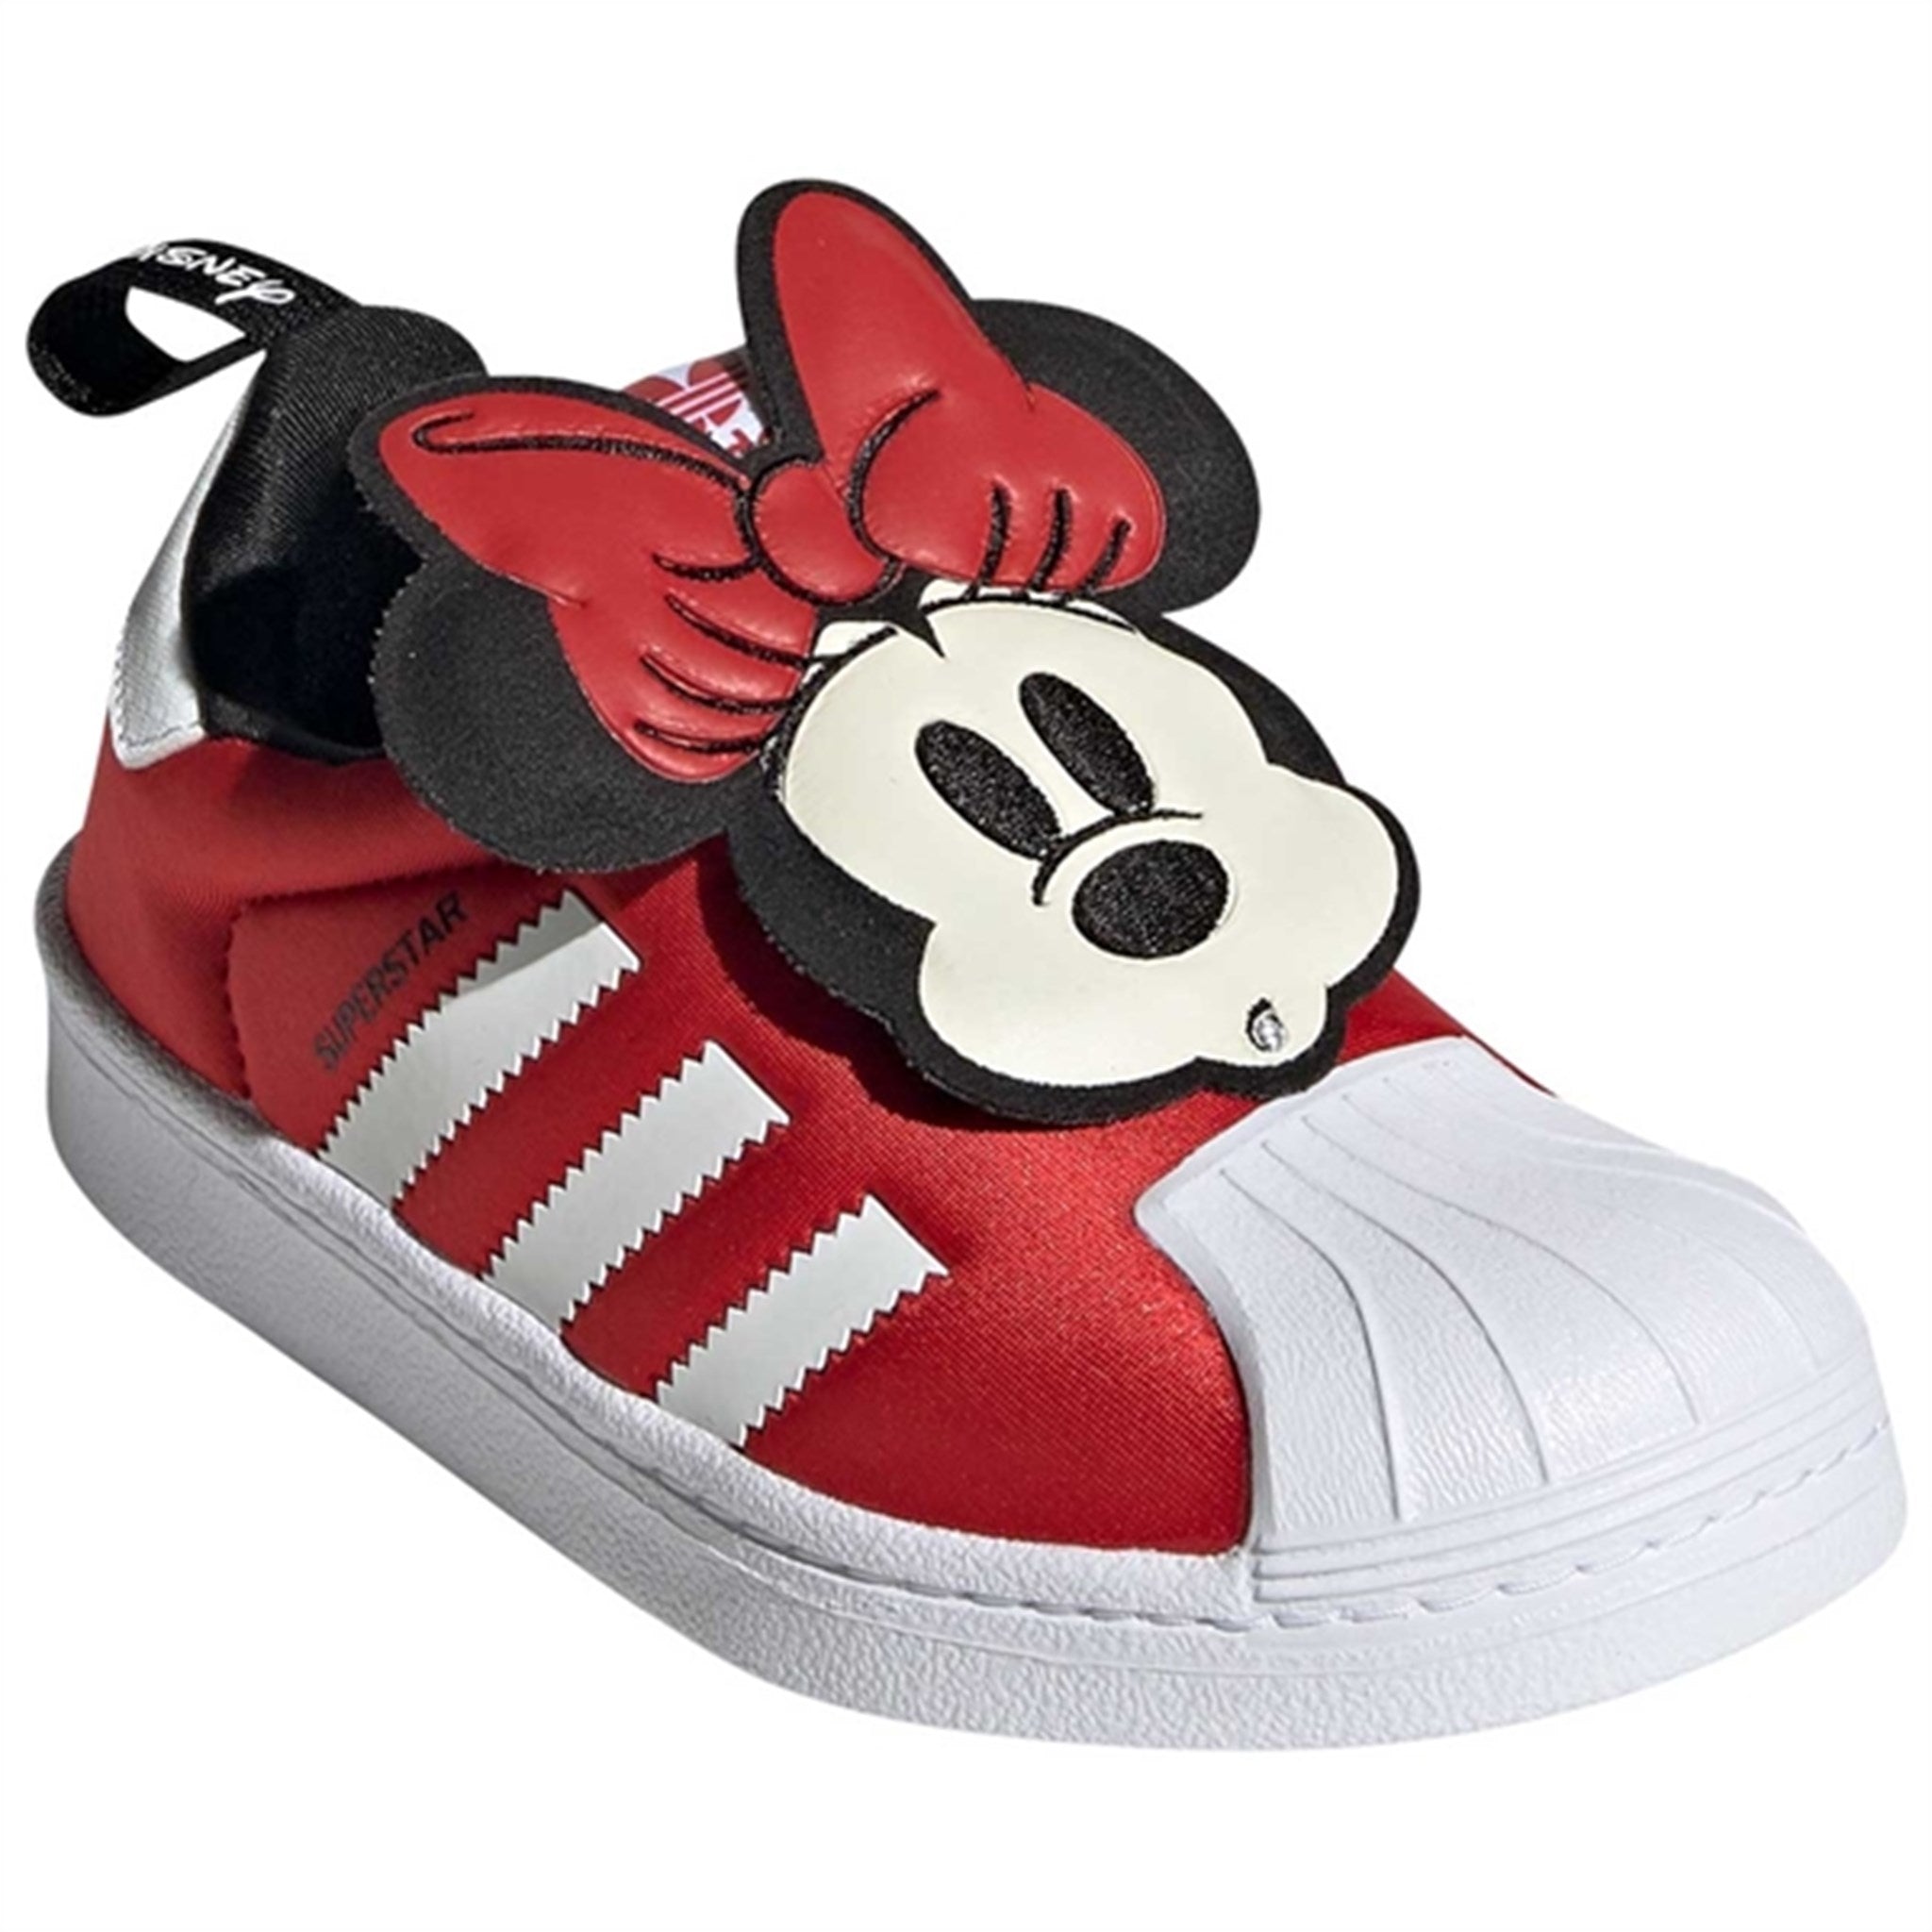 adidas Superstar 360 Shoes Disney Red White Black 2